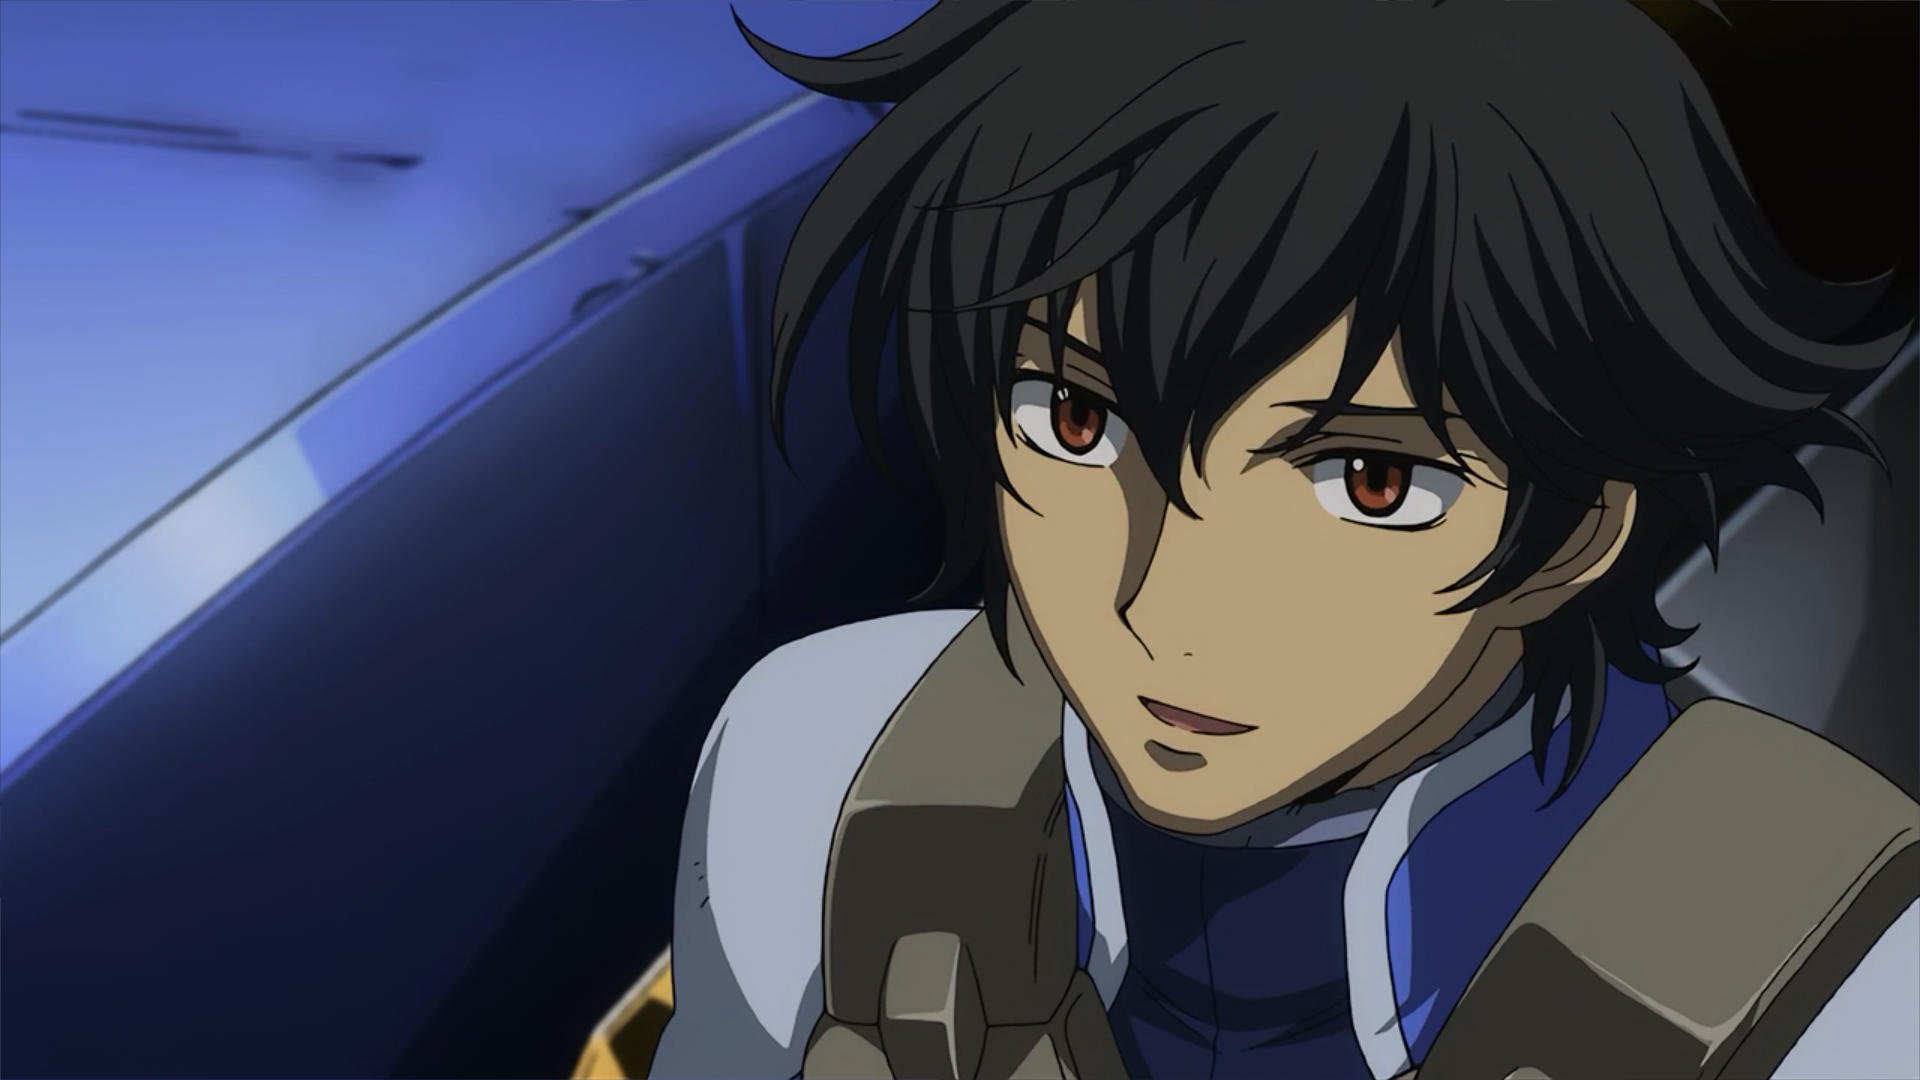 Anime 1920x1080 anime Anime screenshot Mobile Suit Gundam 00 Setsuna F. Seiei